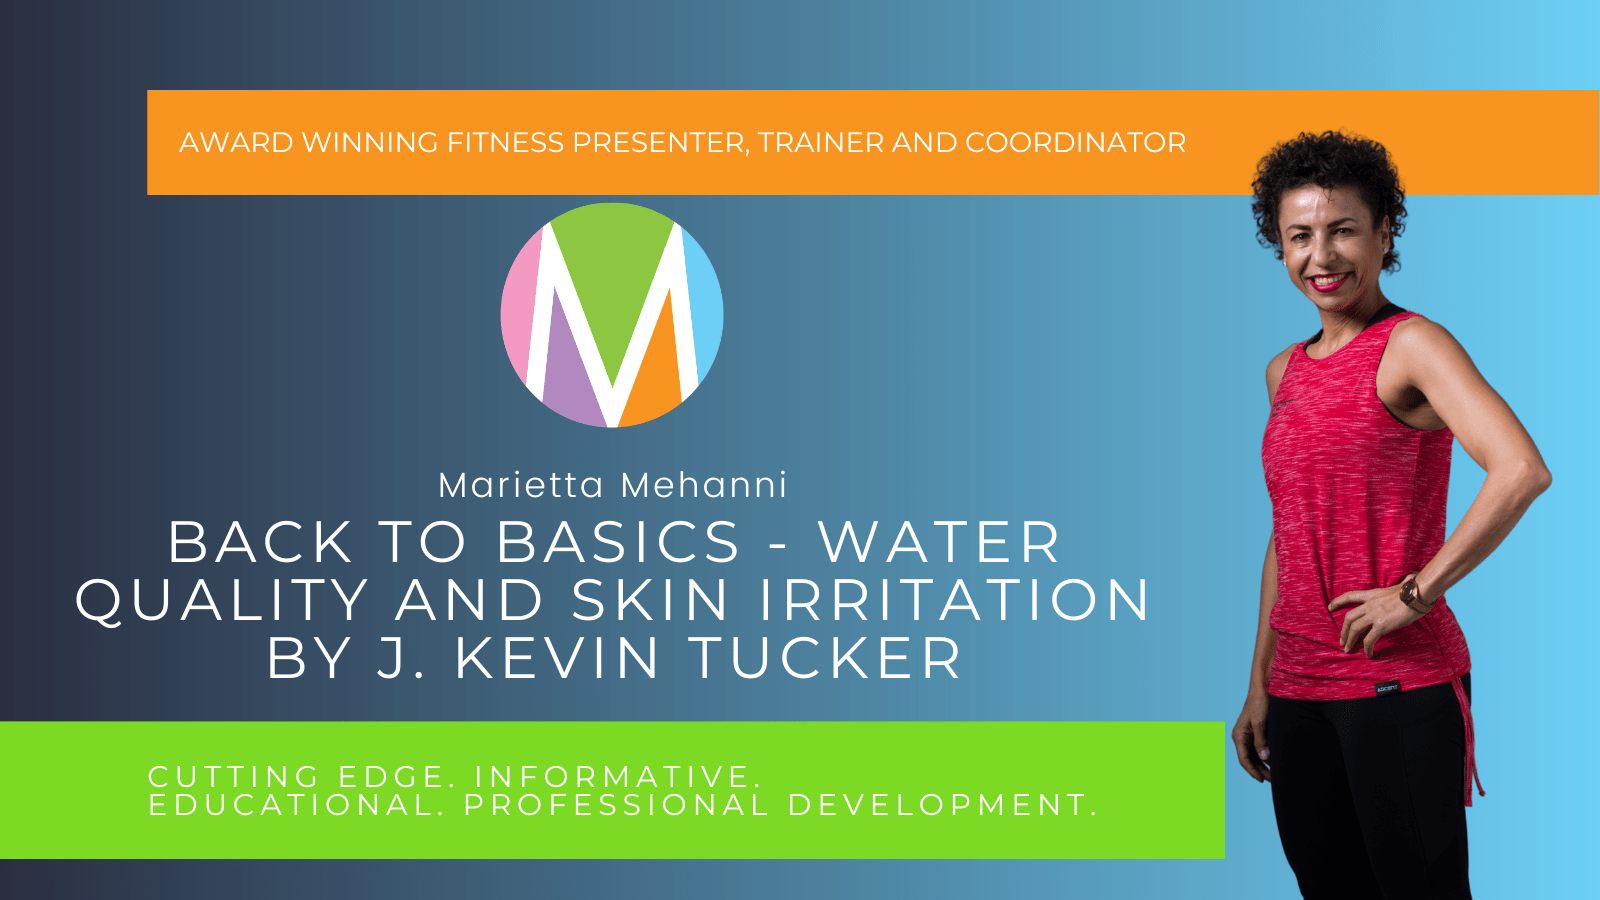 Aqua Article - Back to basic - Water Quality and Skin Irritation by J. Kevin Tucker, Marietta Mehanni